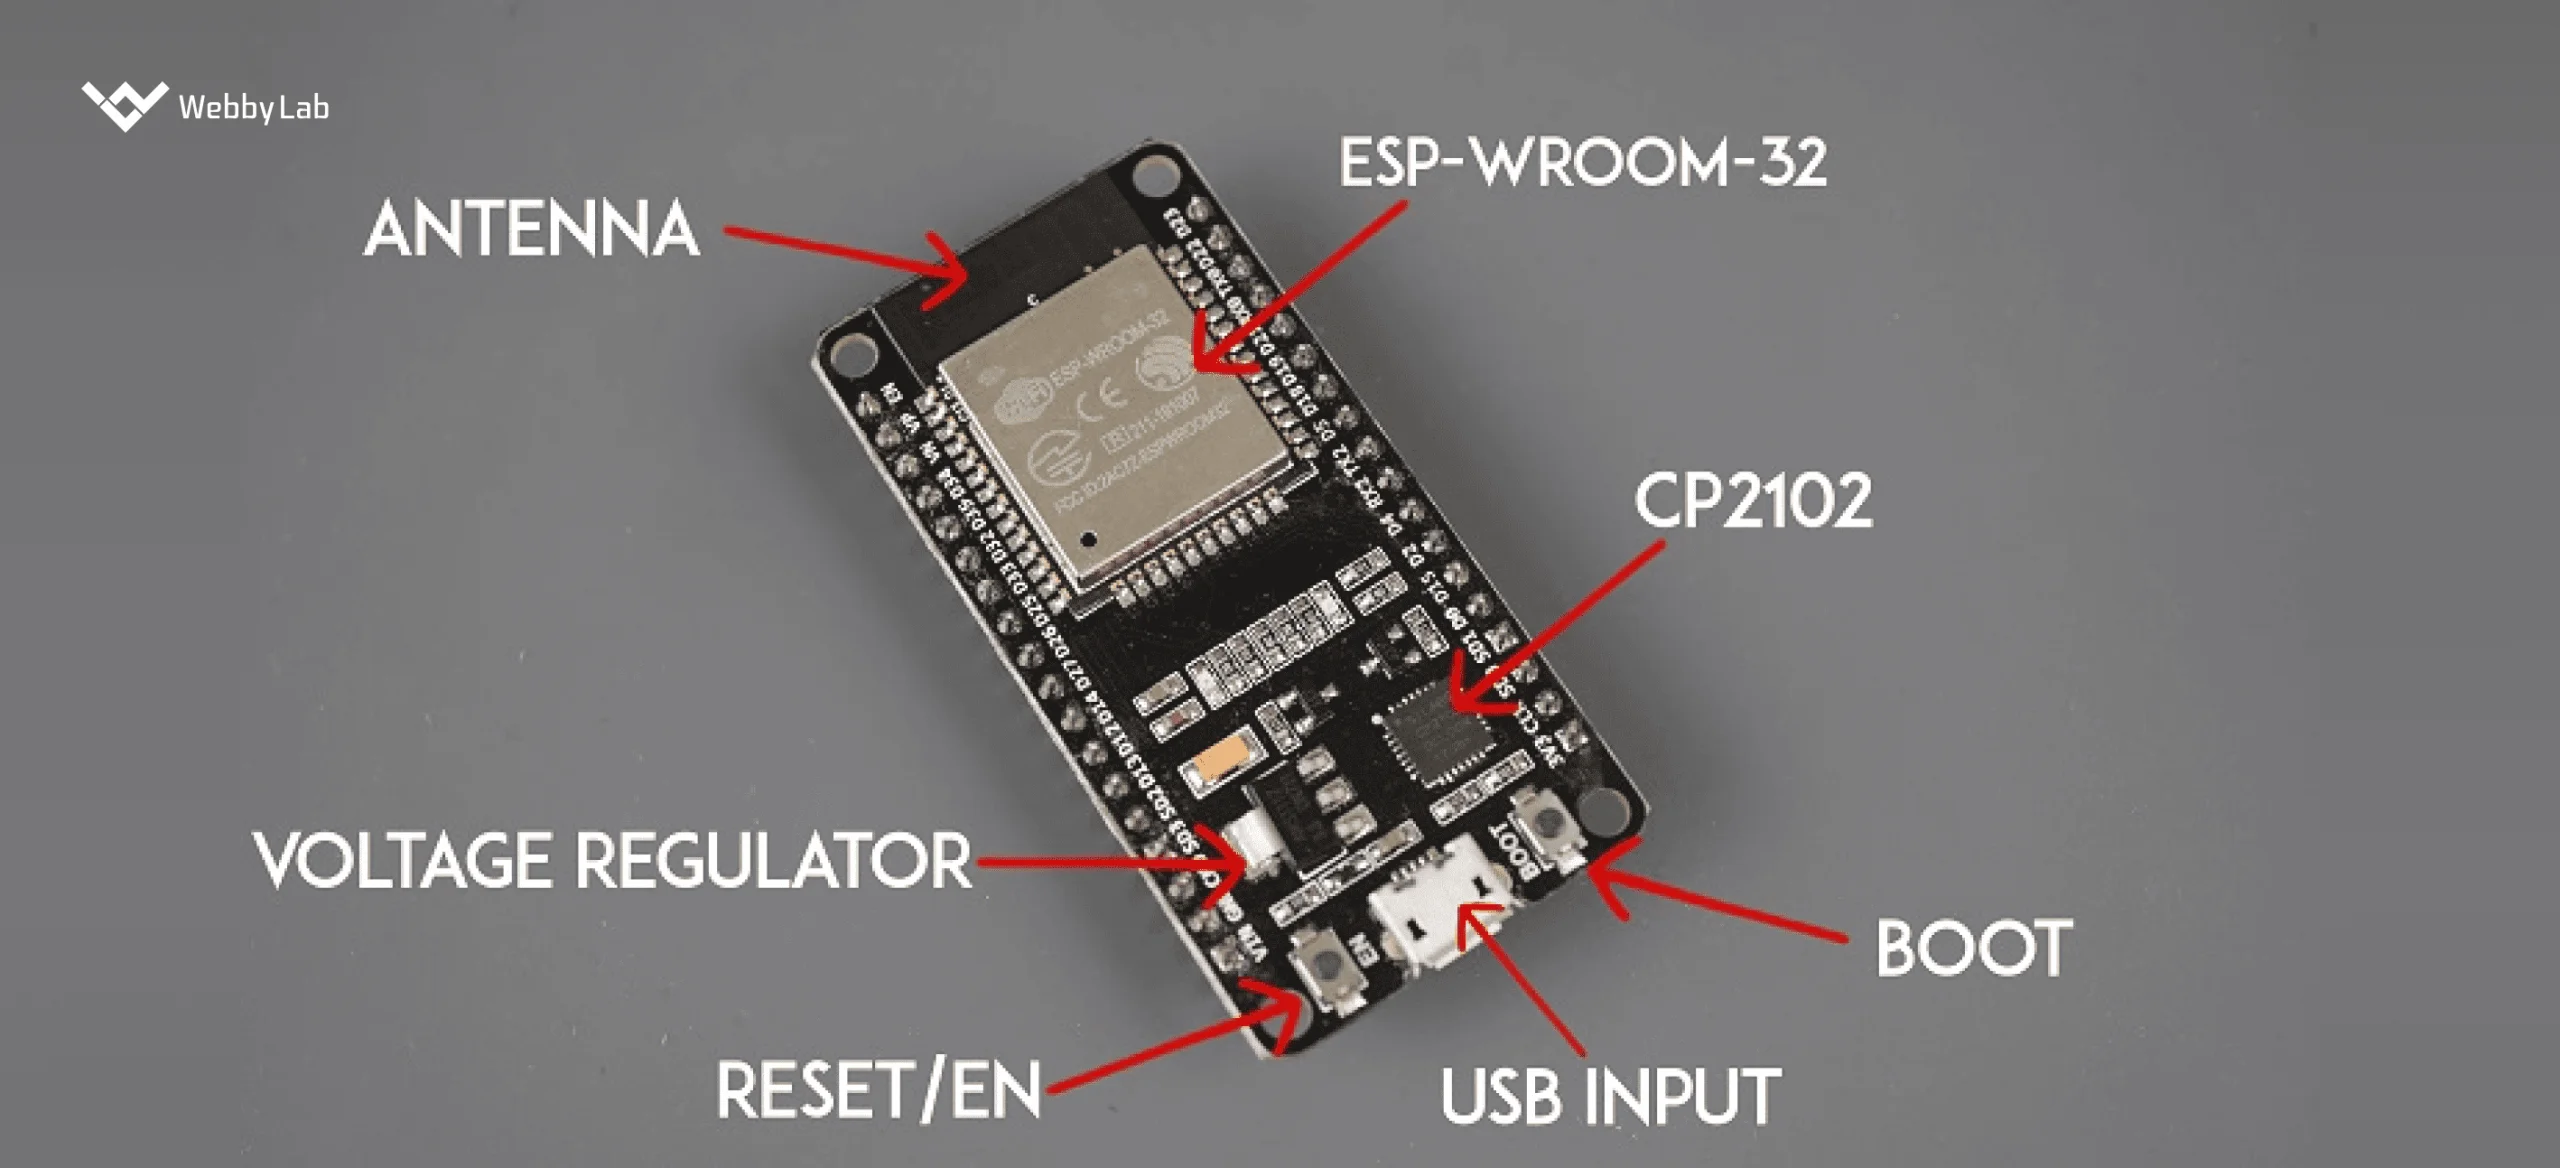  An ESP32 development board’s components explained. 